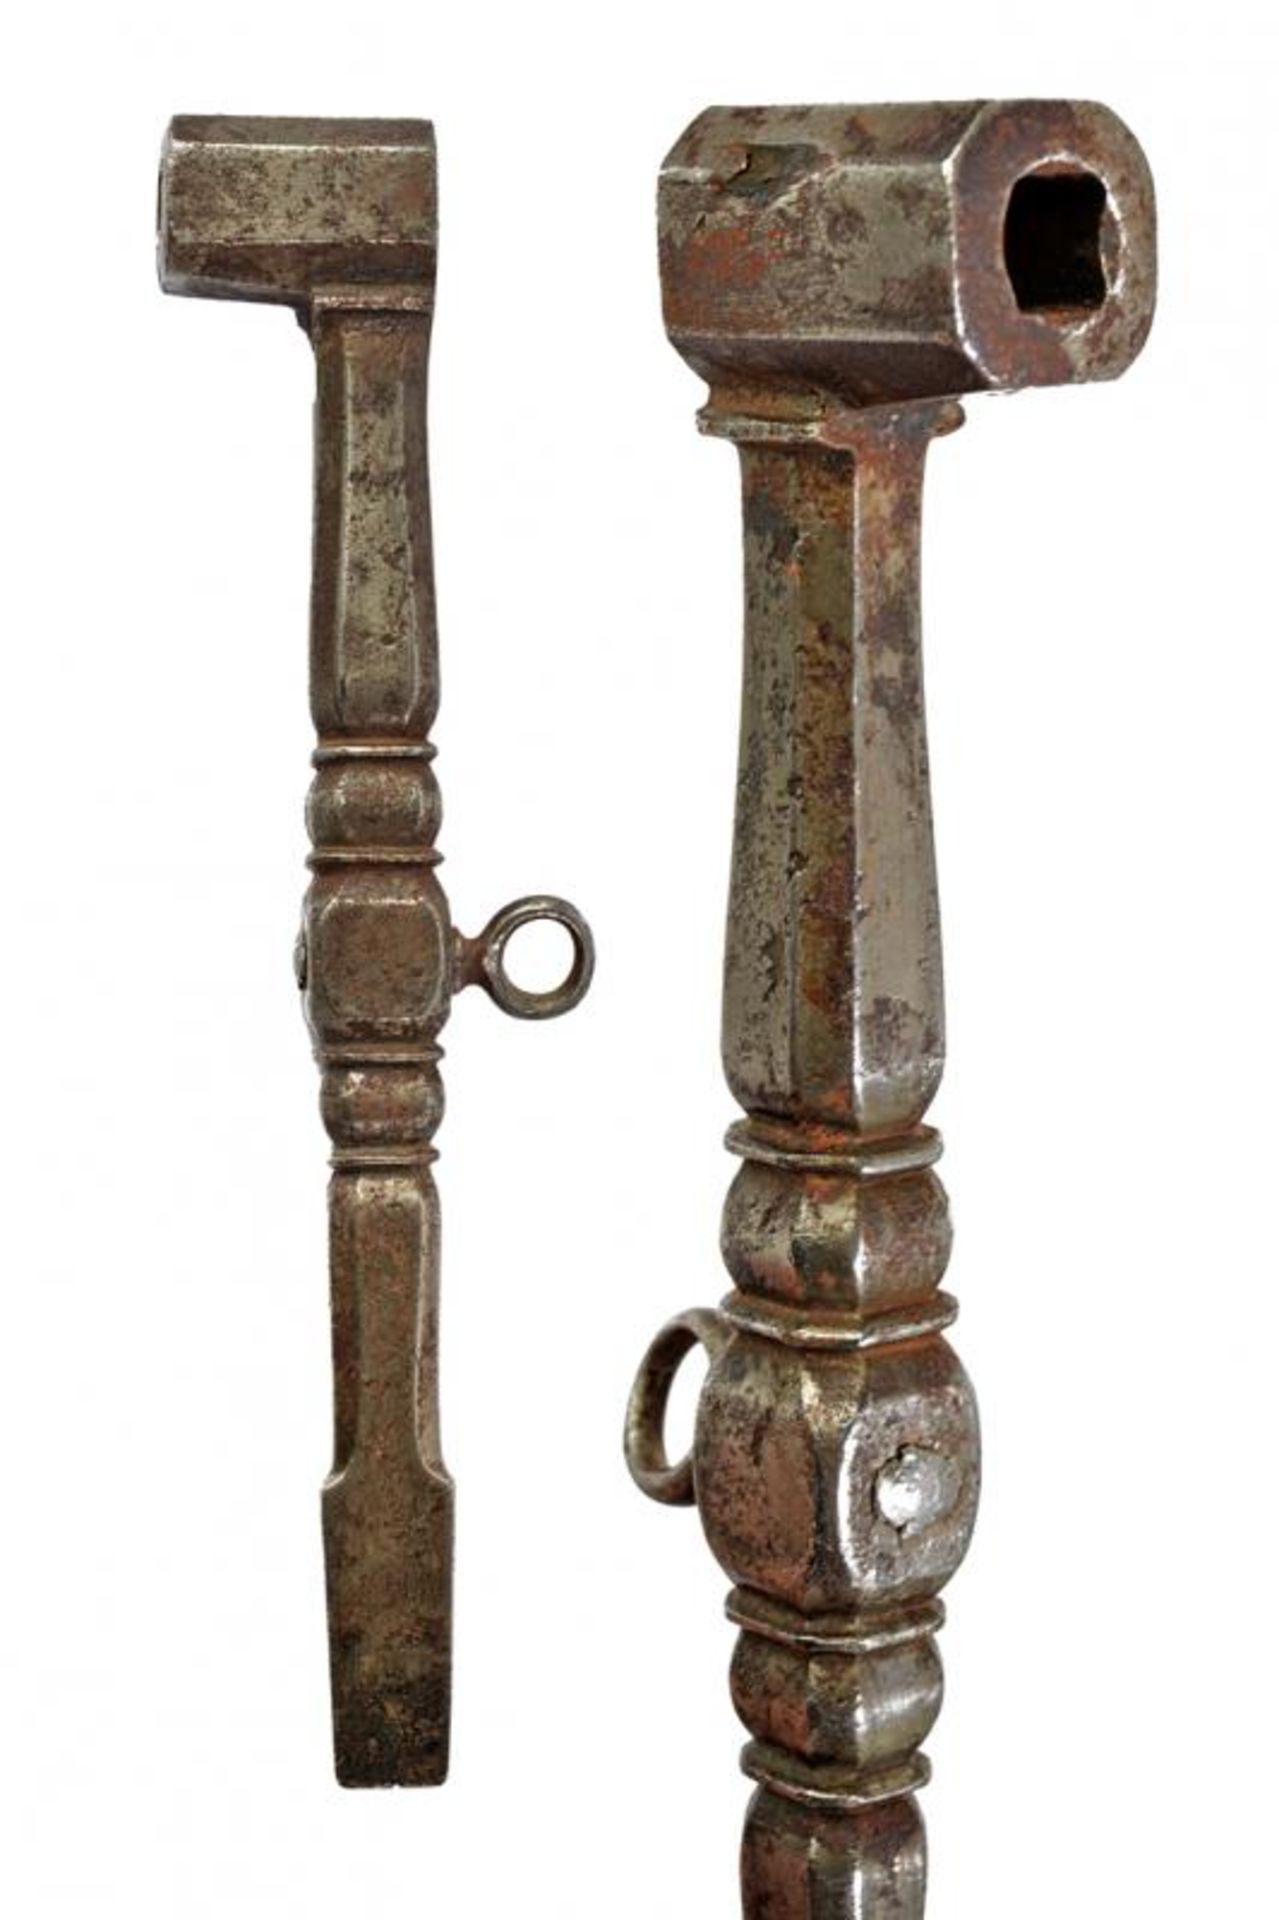 A wheel lock key